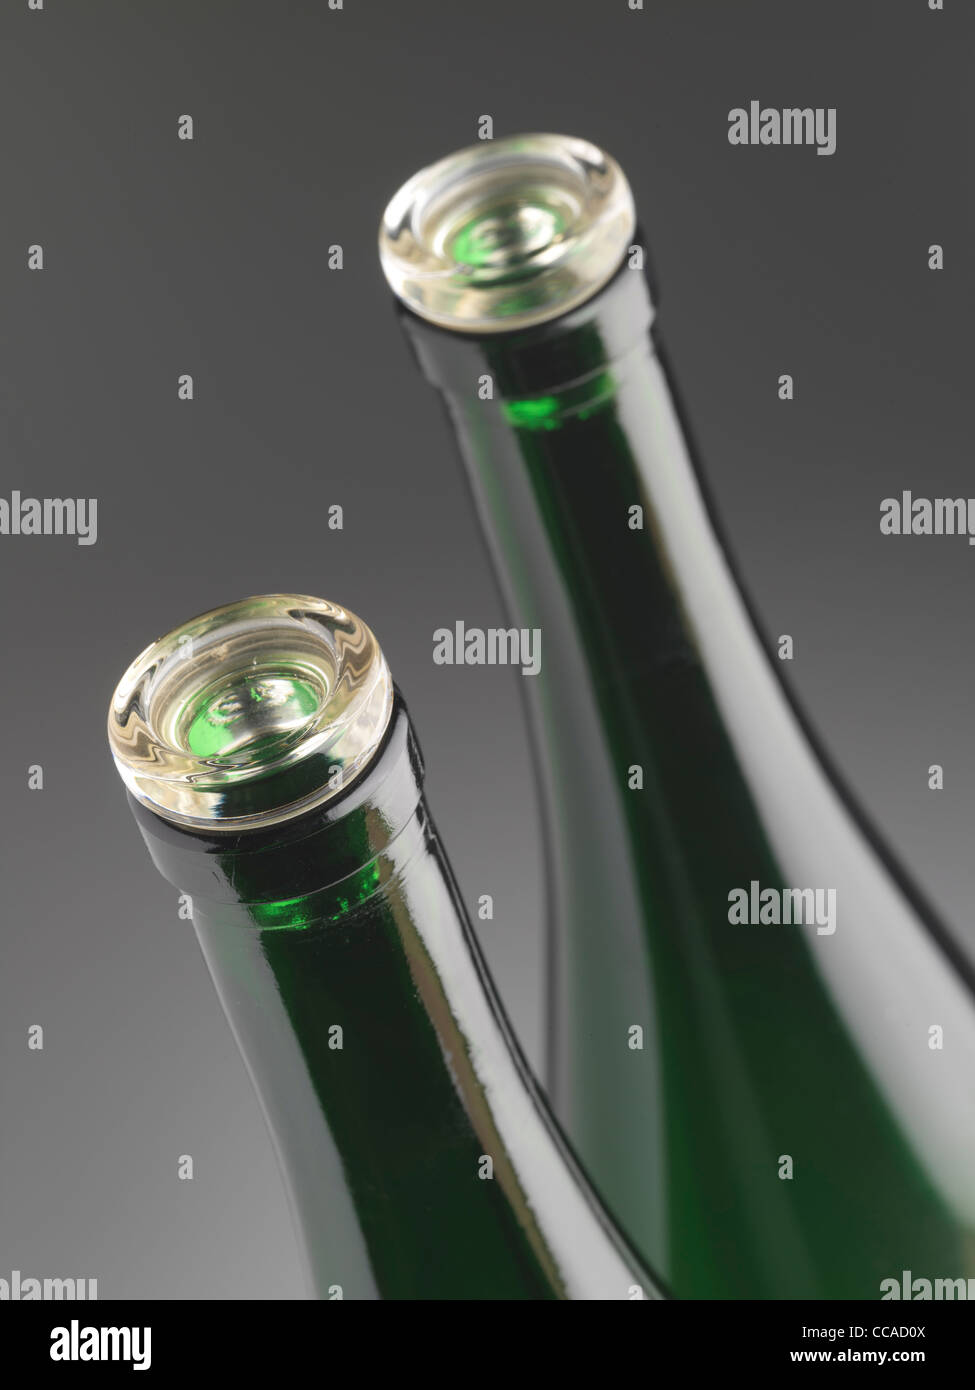 botella, botella de vidrio, tapa de botella, botellas, botellas de vidrio,  instrumental de vidrio, tapones para botellas Fotografía de stock - Alamy